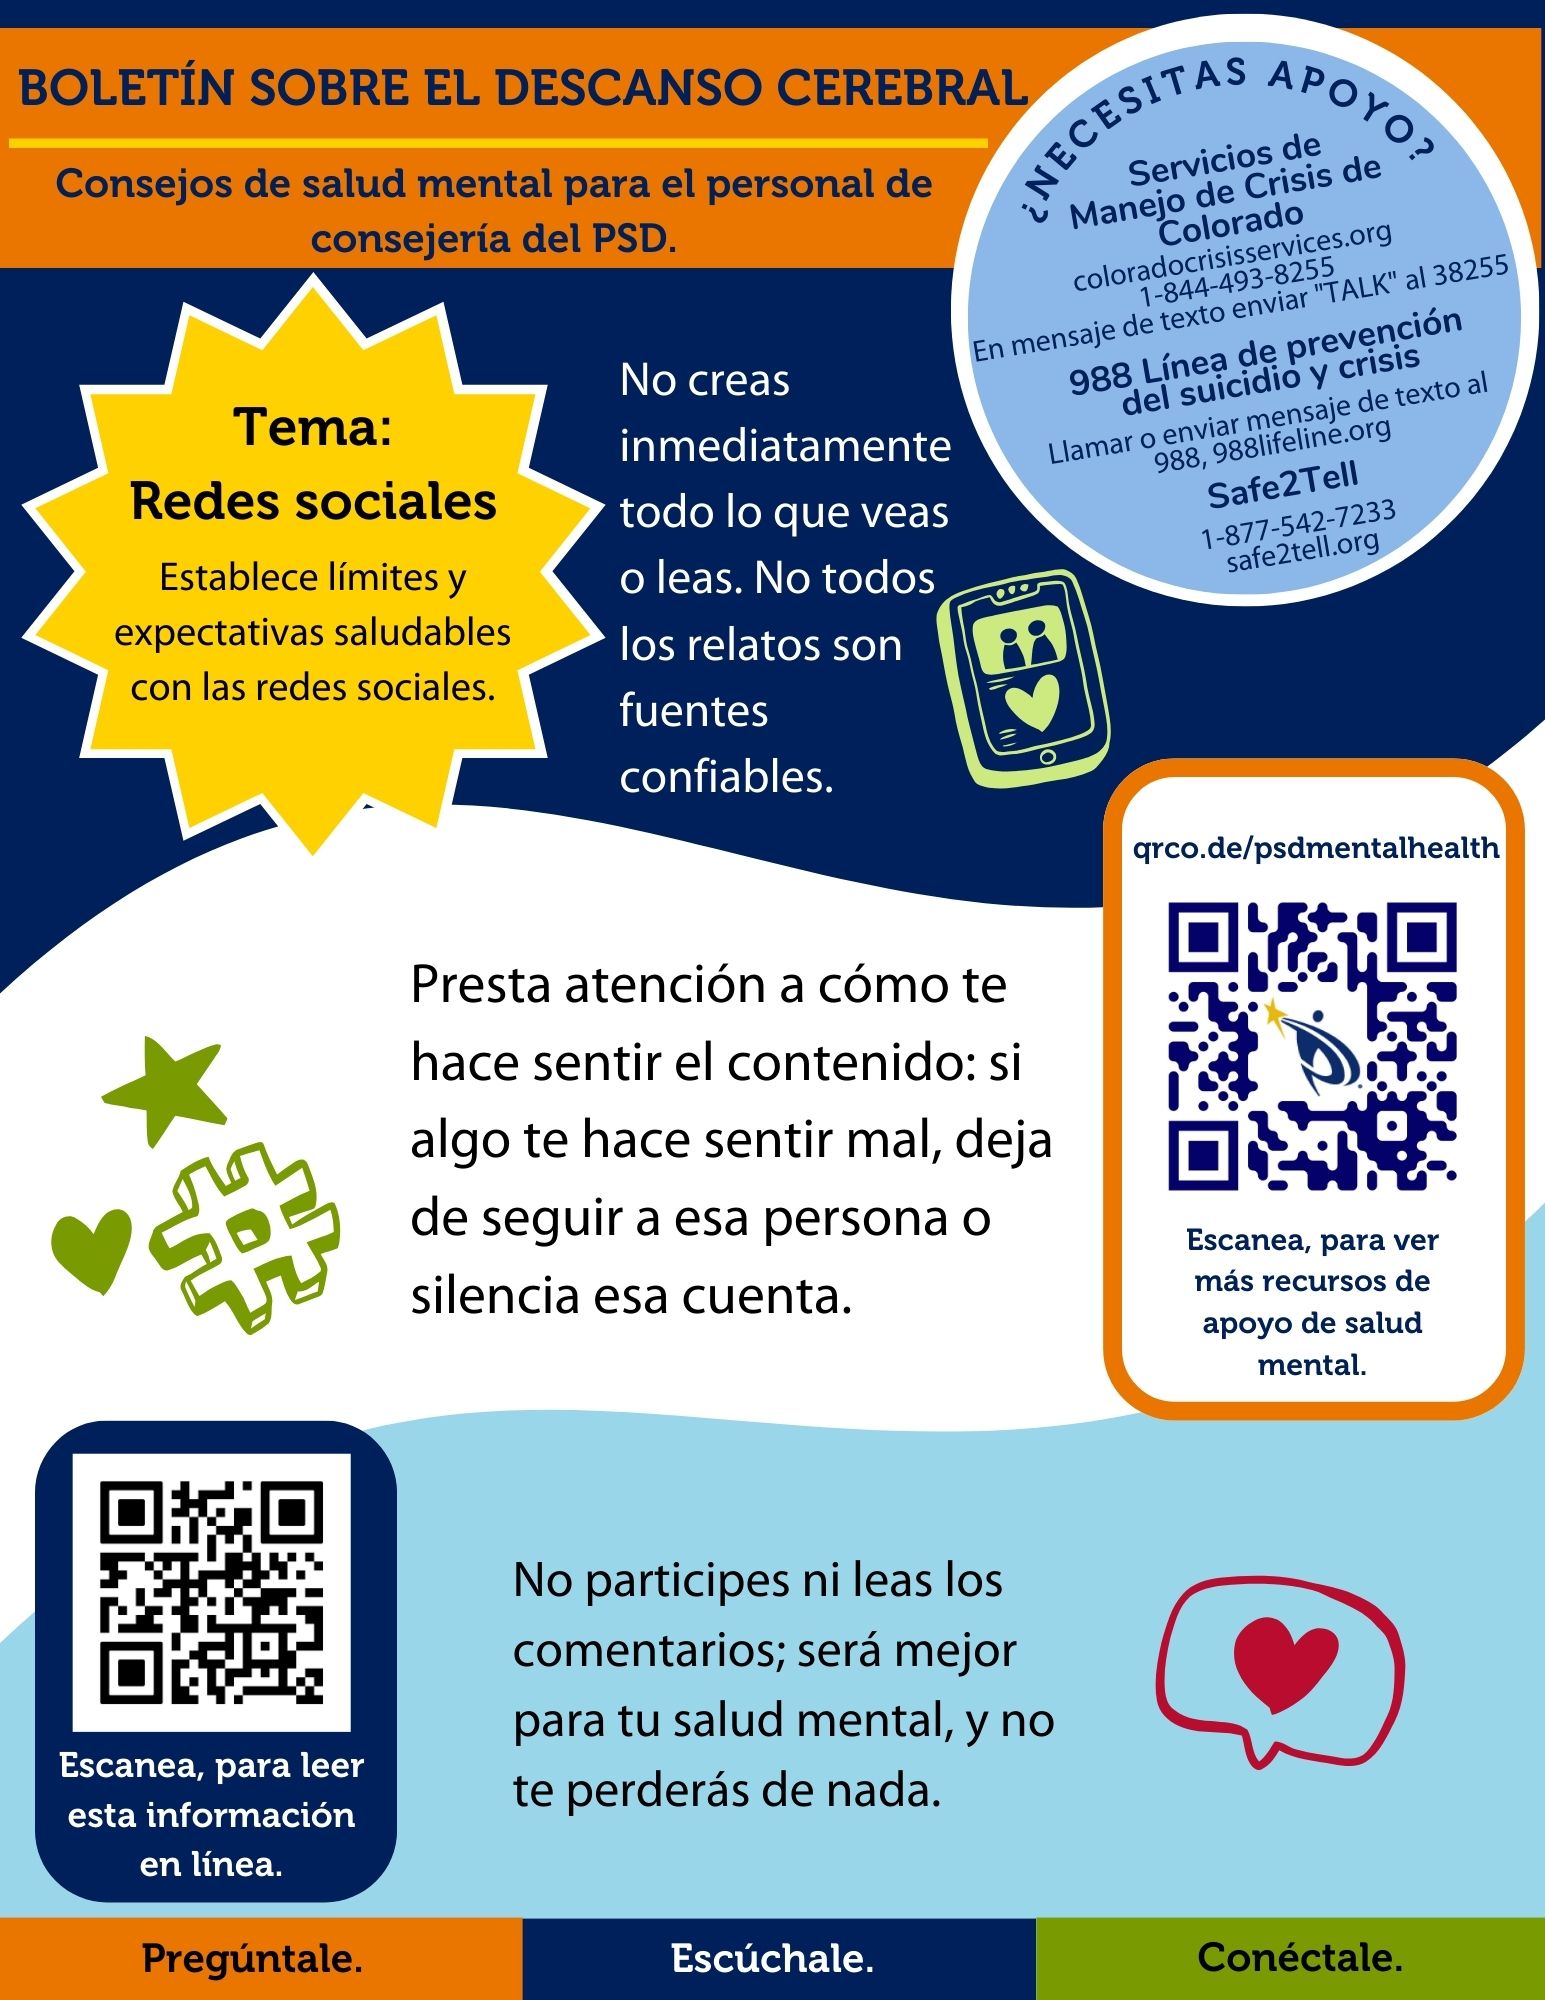 Brain Break in Spanish - Social Media - Text is in the linked docuement. 